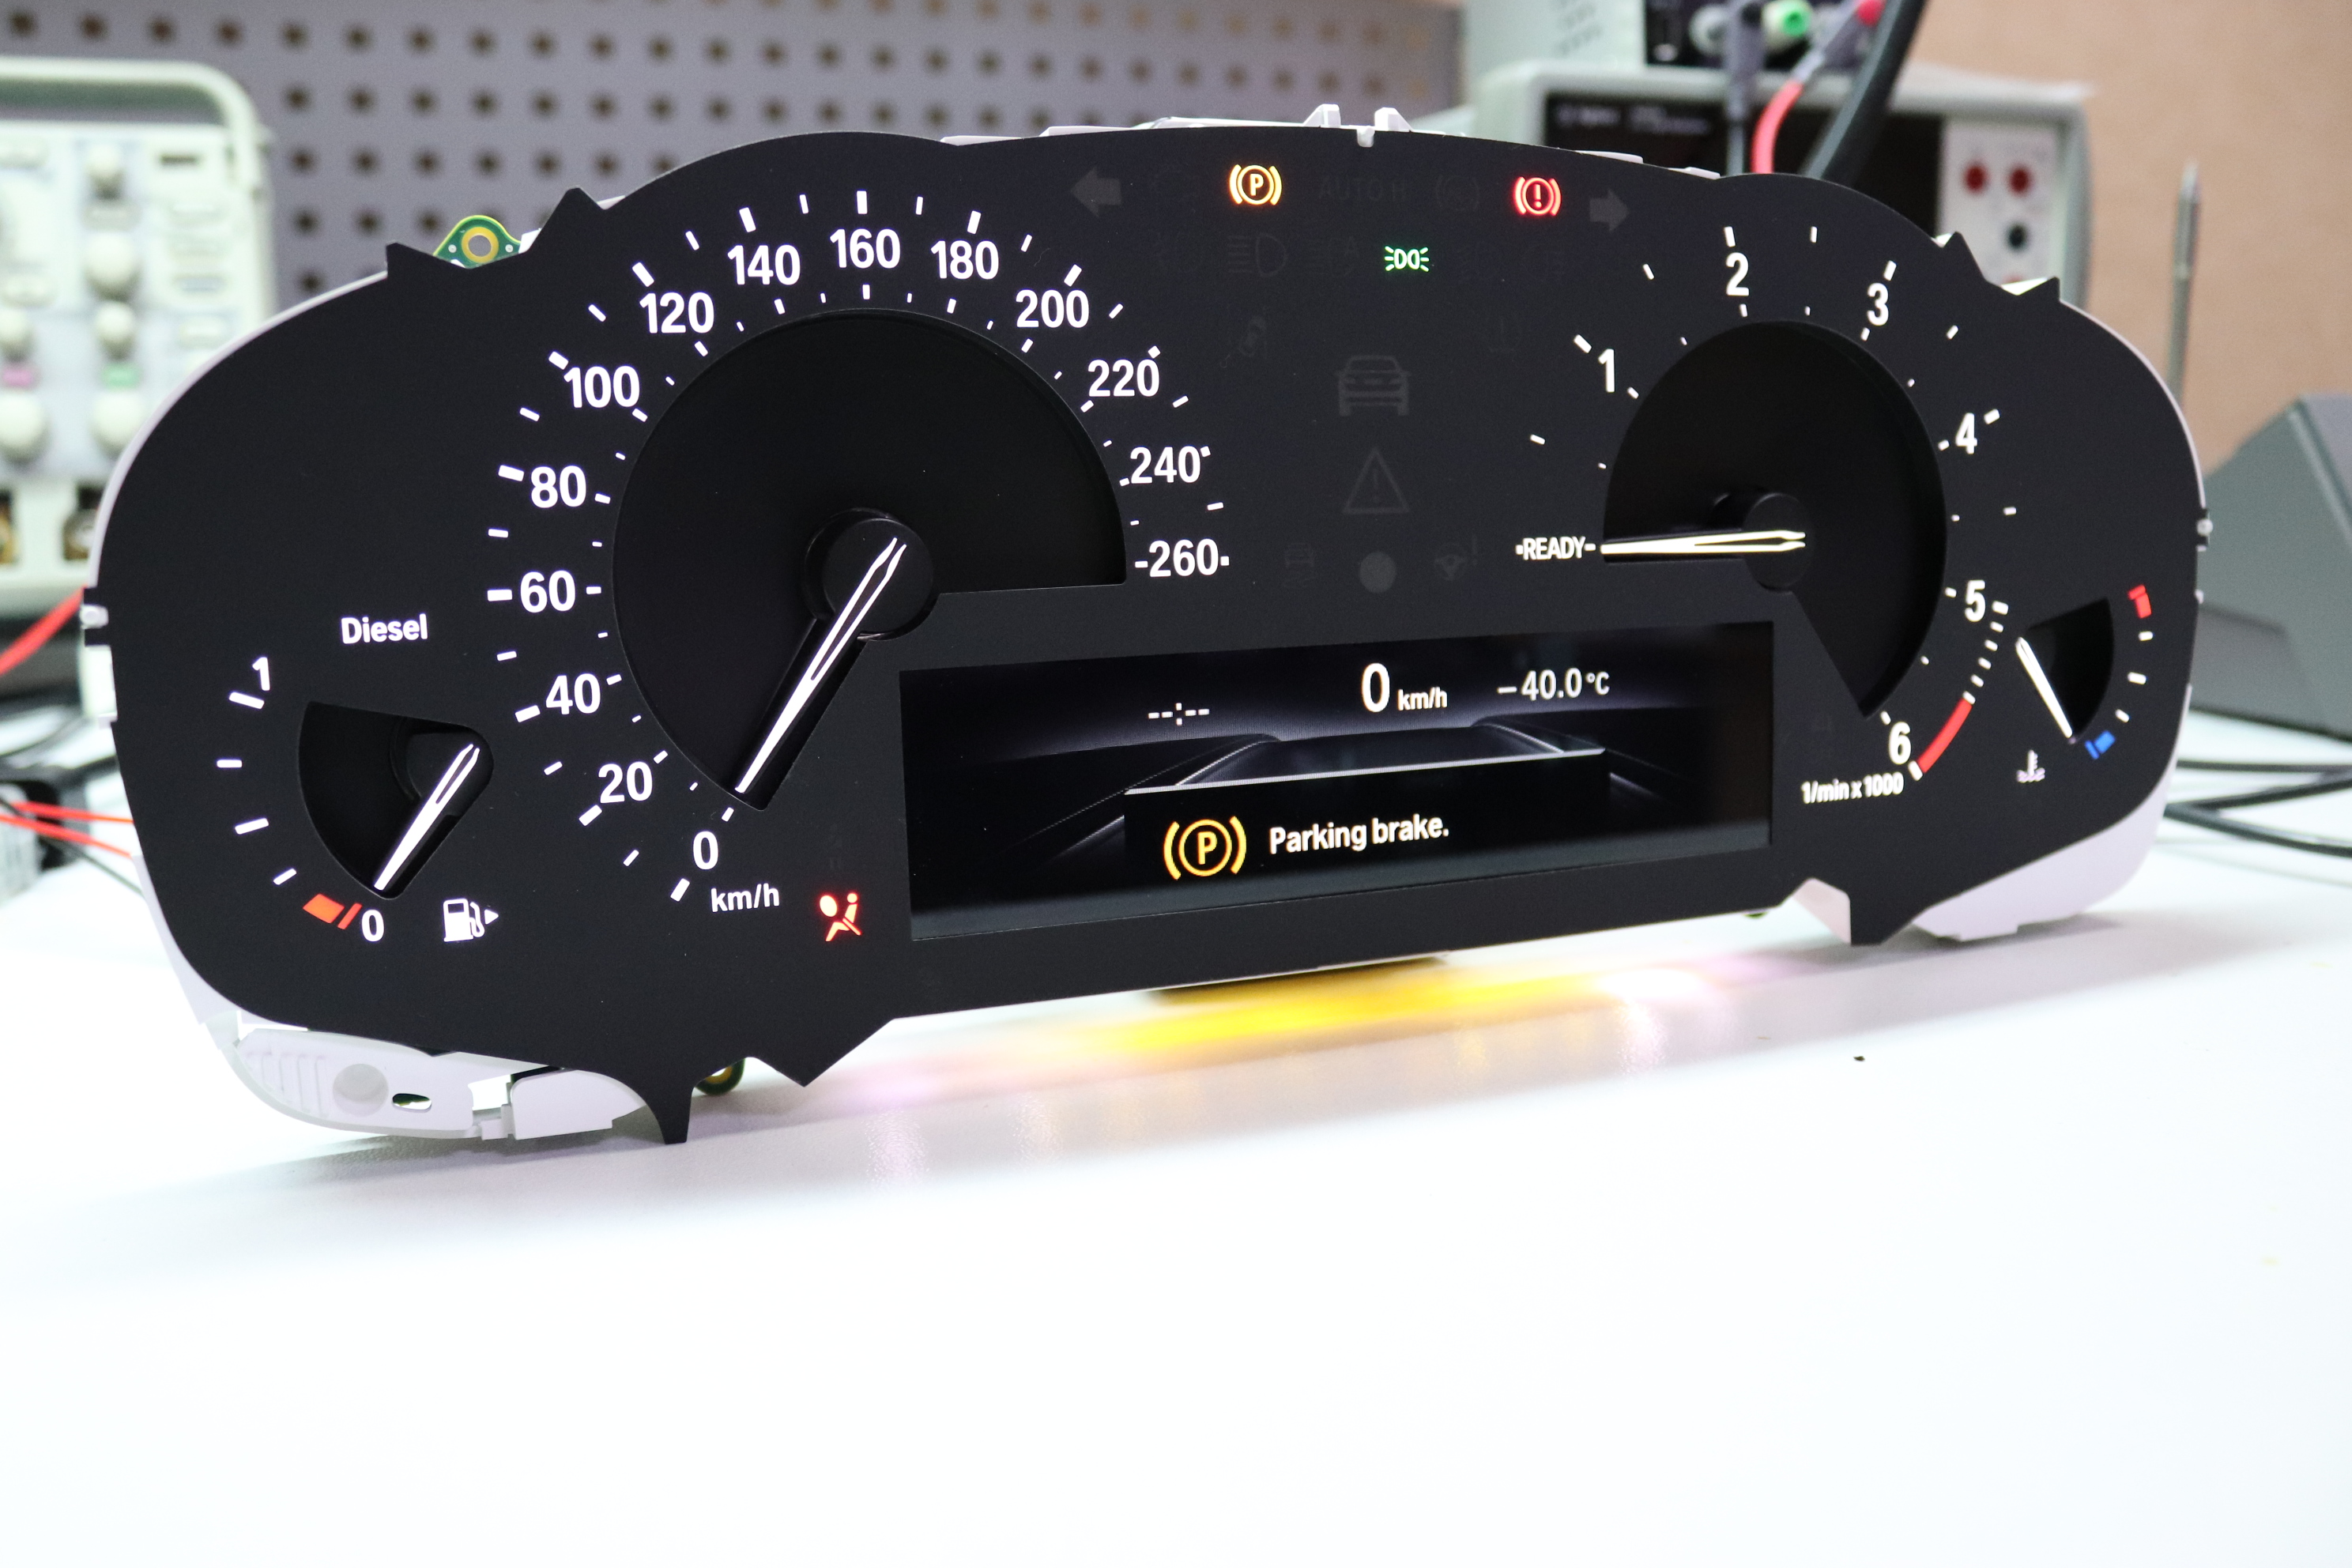 Запуск панели приборов BMW G30 на столе при помощи CAN-Hacker